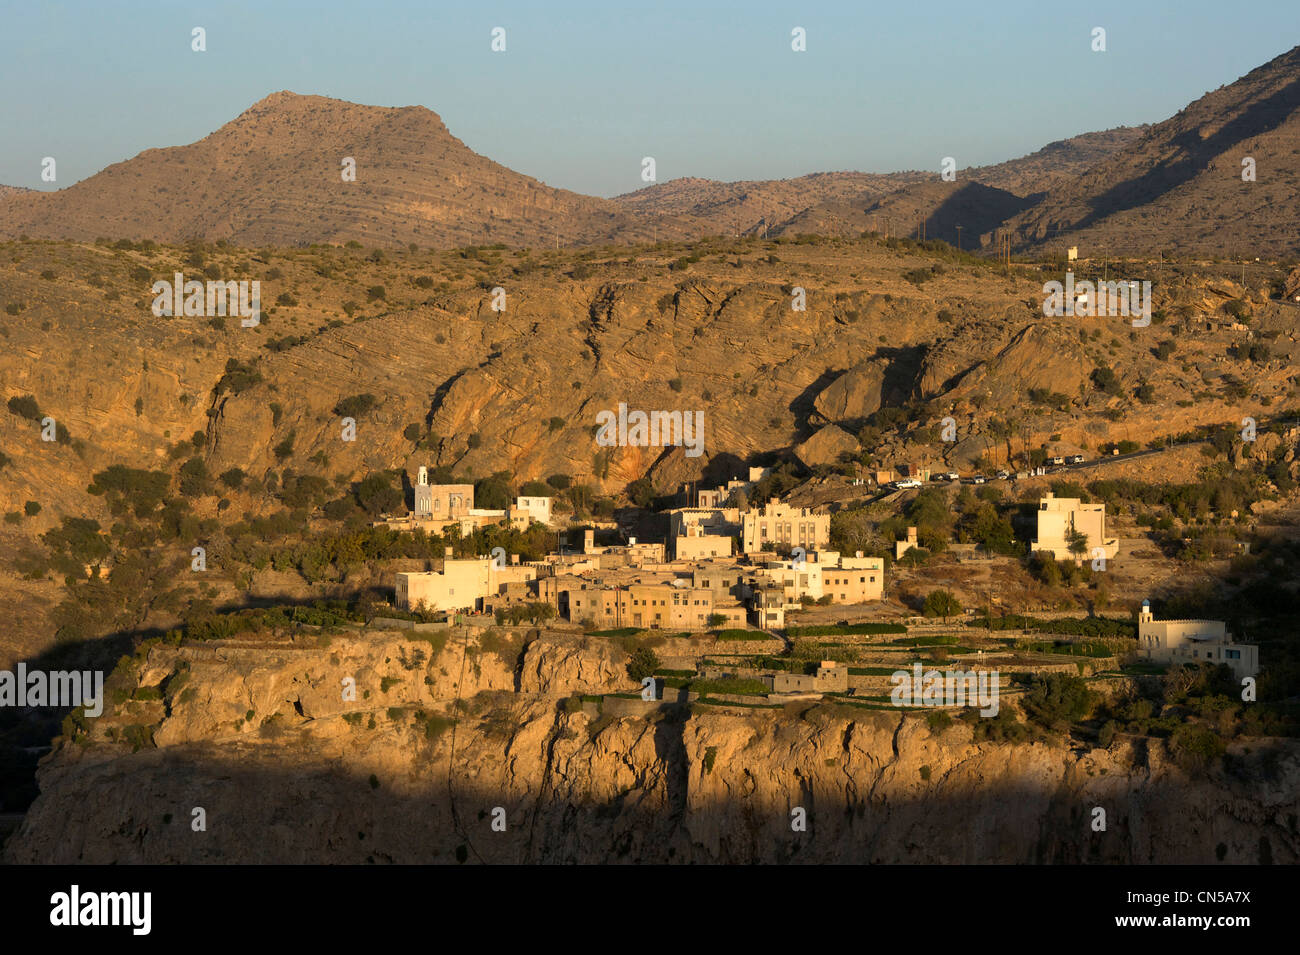 Sultanate of Oman, Al Dakhiliyah Region, Western Hajar Mountains, Jebel Akhdar and Saiq Plateau, Al Ain Stock Photo